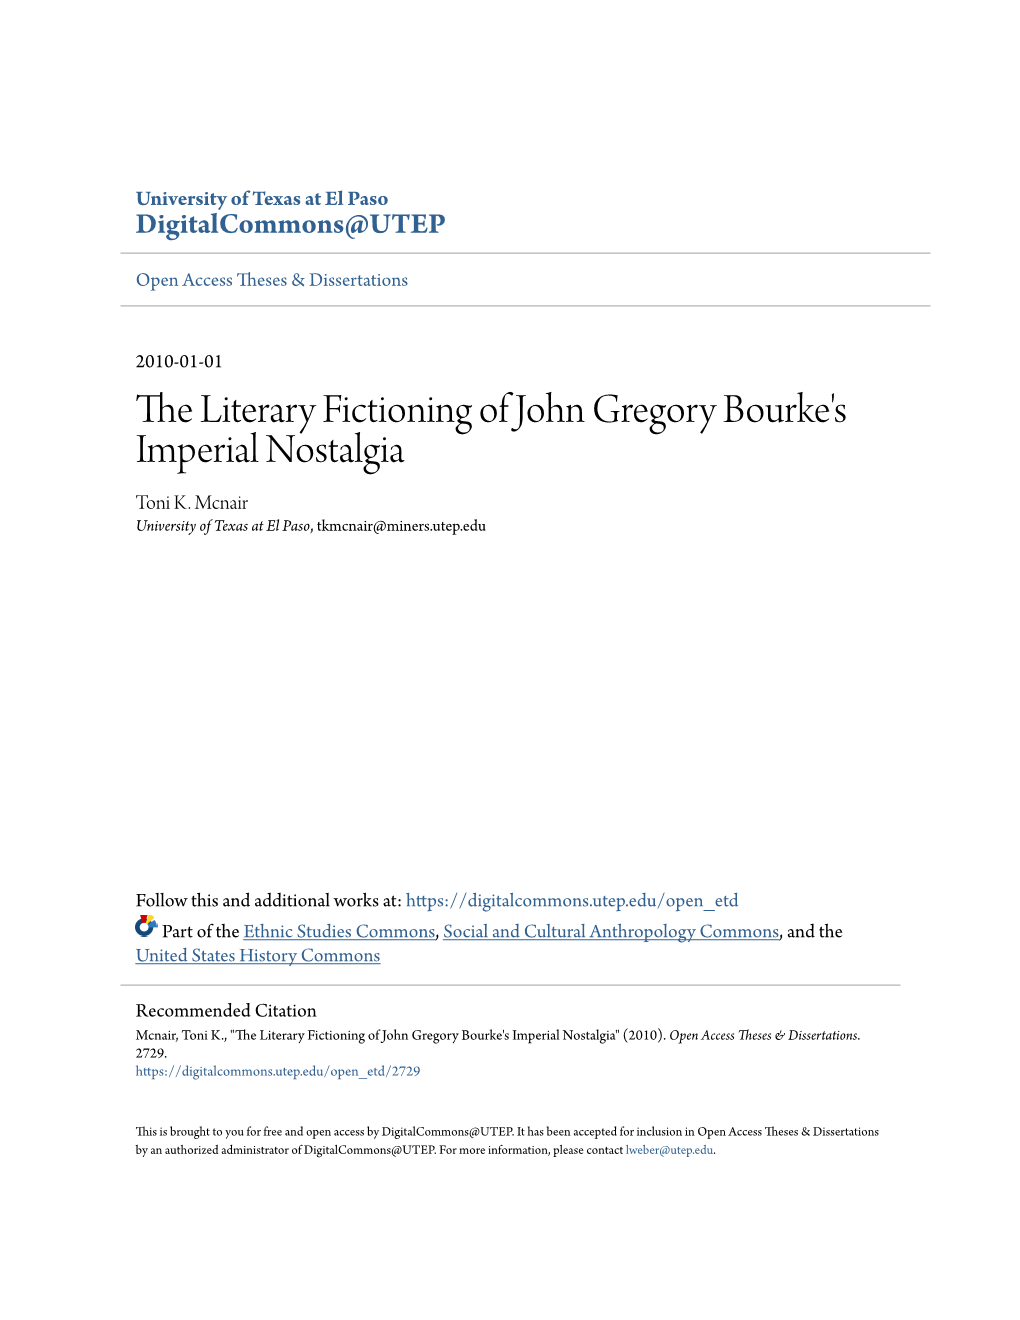 The Literary Fictioning of John Gregory Bourke's Imperial Nostalgia Toni K